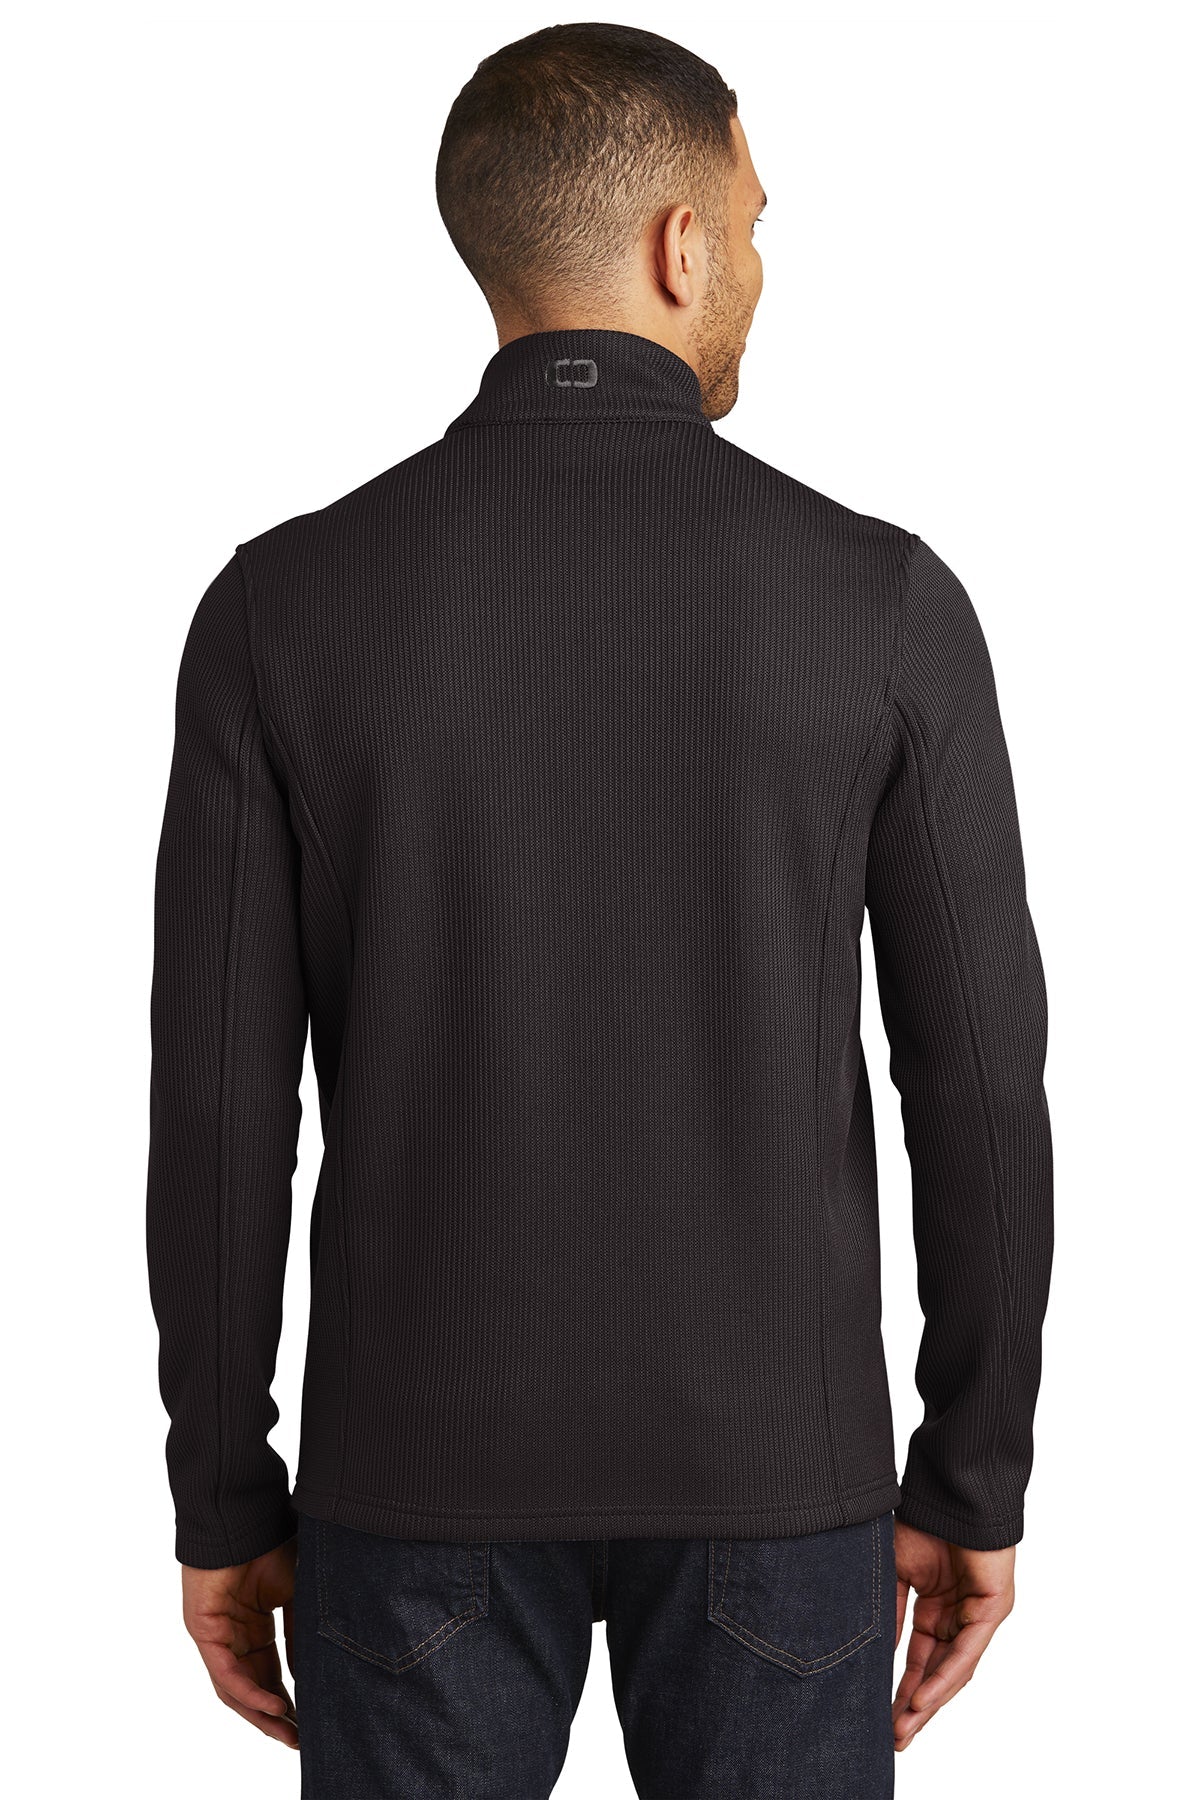 OGIO Grit Customized Fleece Jackets, Blacktop